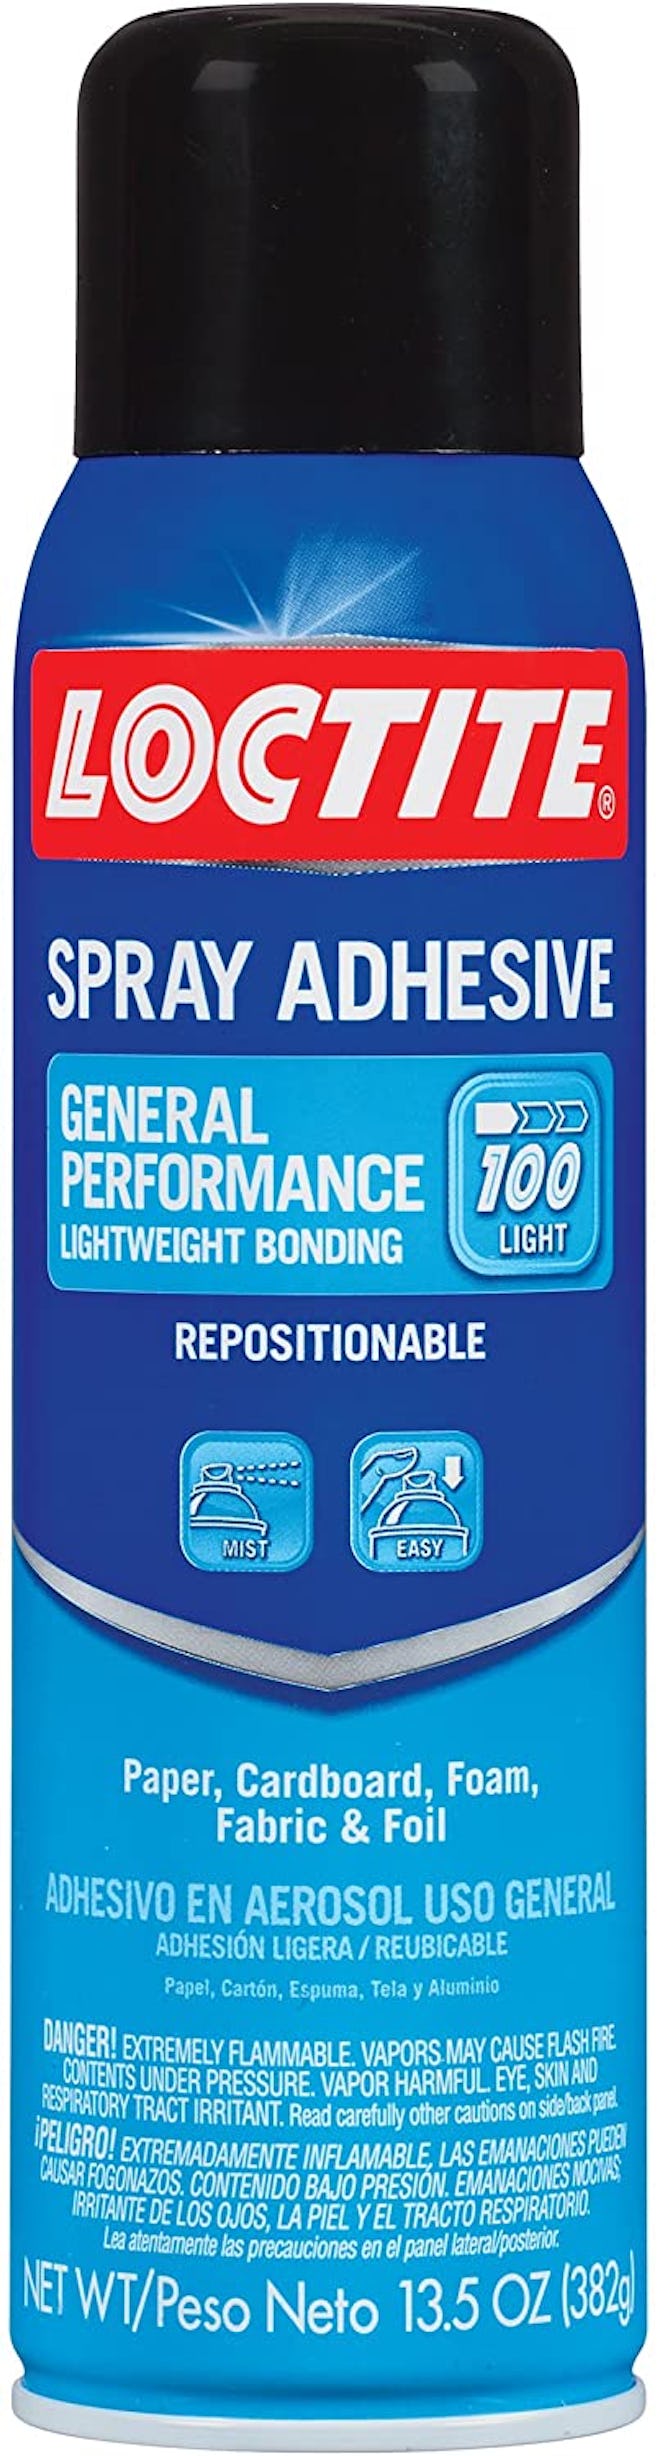 Loctite Aerosol Can General Purpose Spray Adhesive